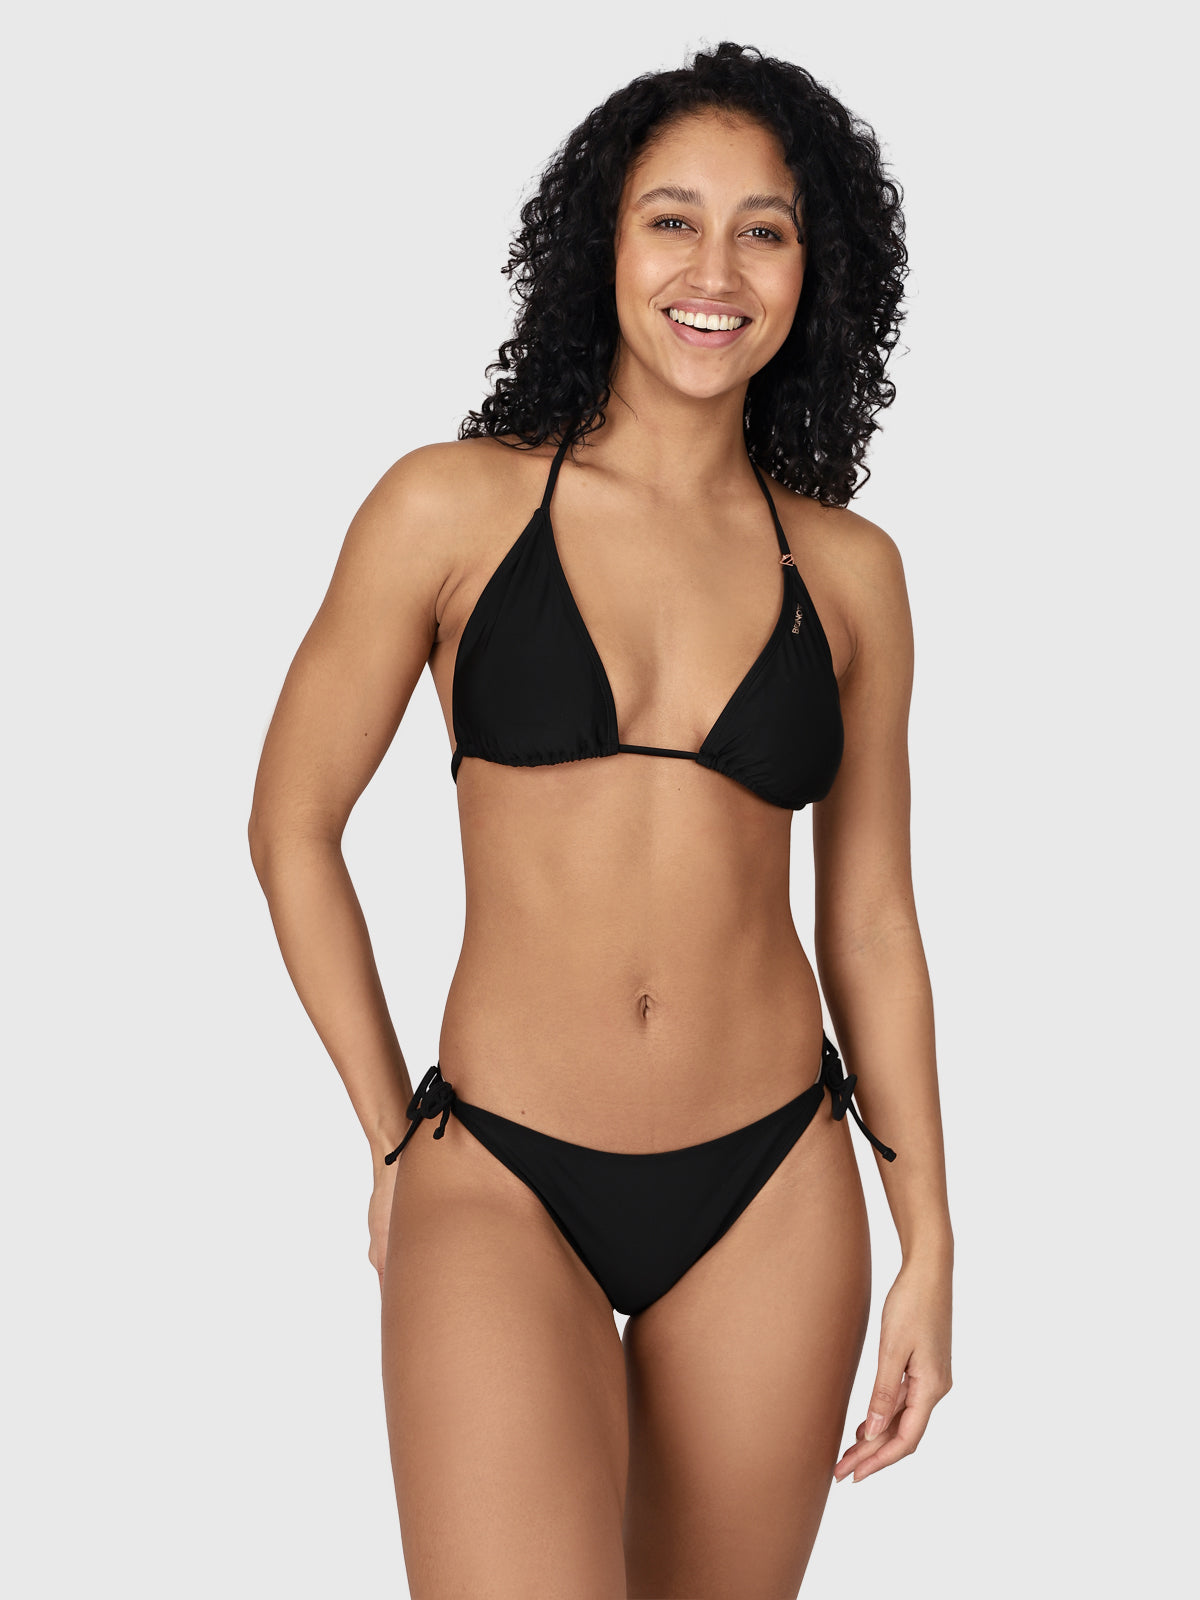 waterstof Flipper privaat Novalee-N Women Bikini Top Black